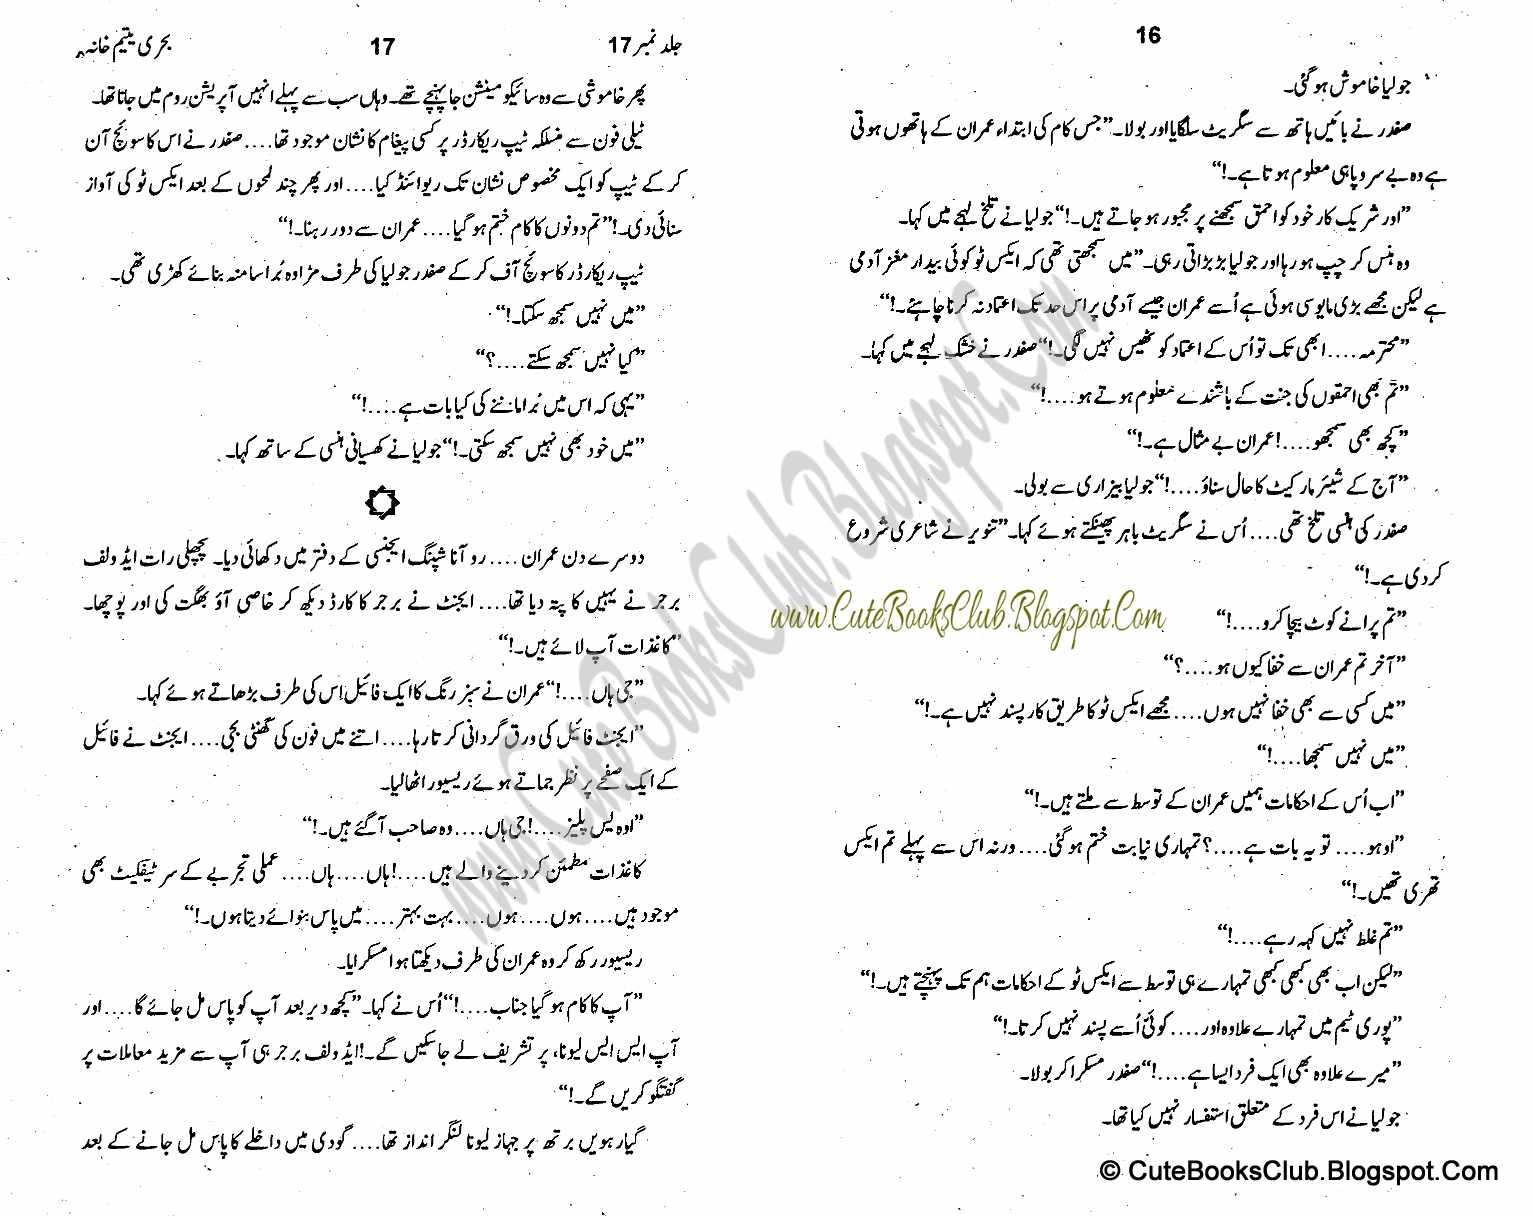 057-Behri Yateem Khana, Imran Series By Ibne Safi (Urdu Novel)